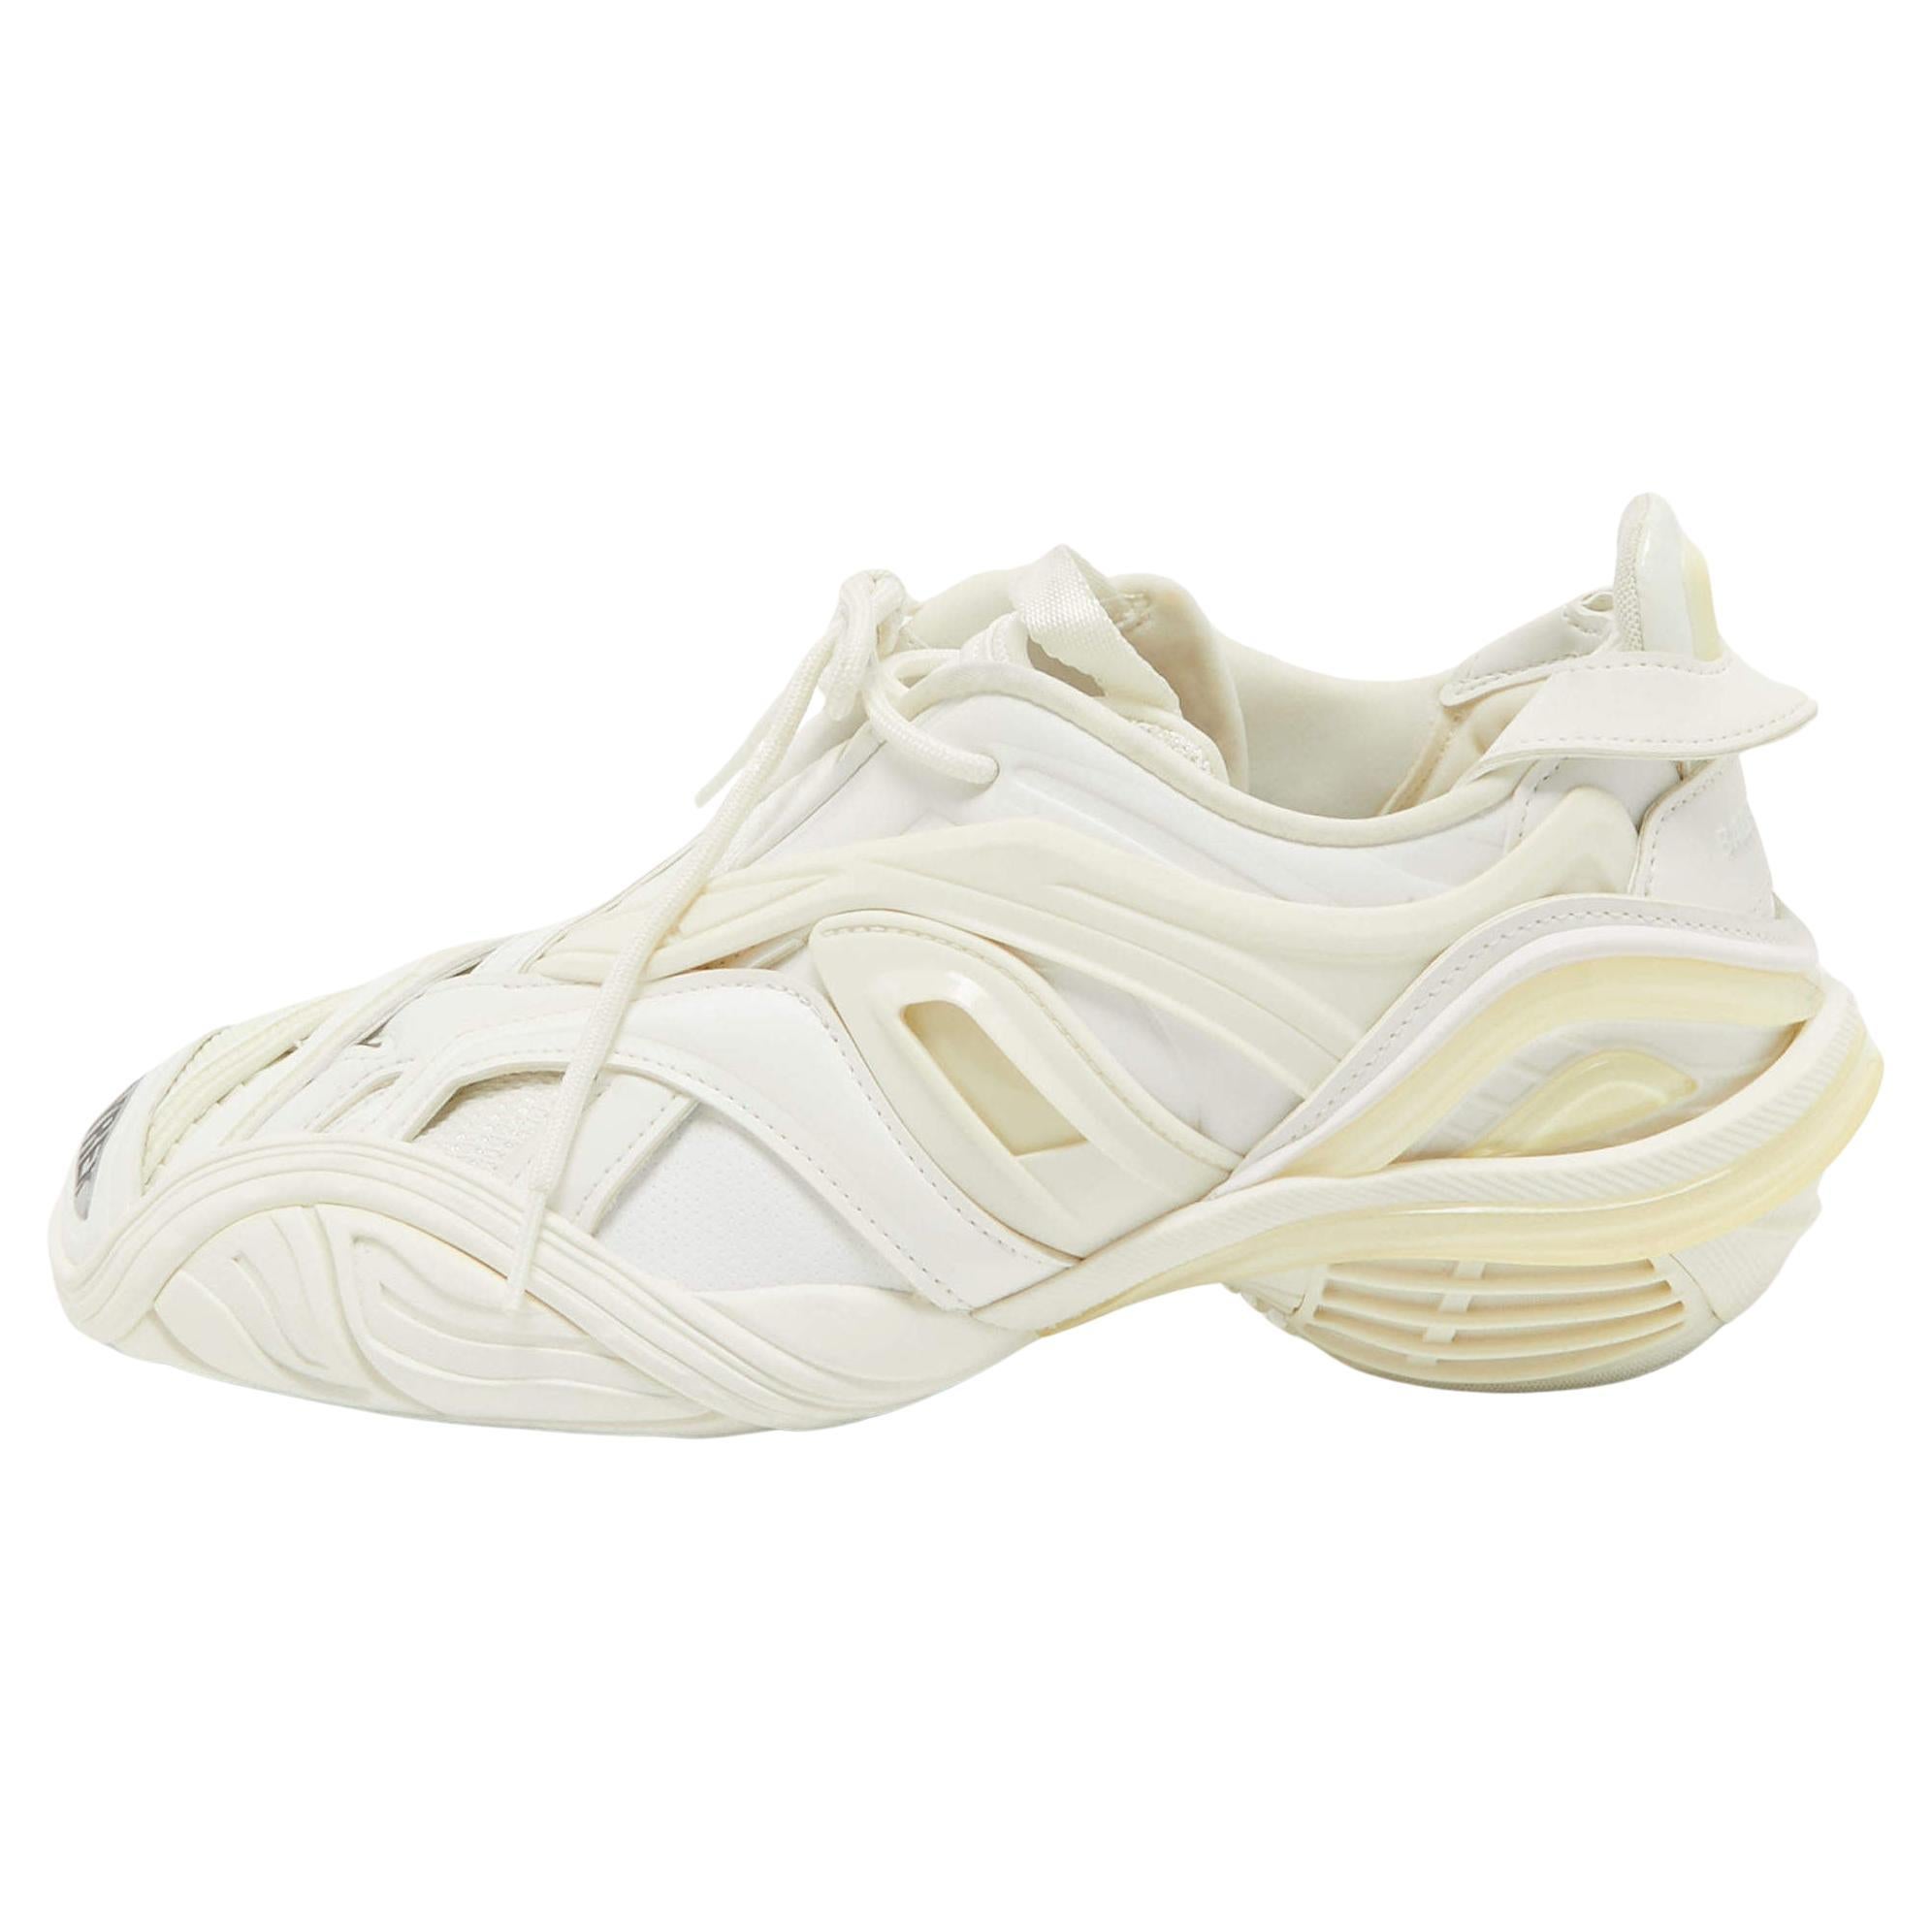 Balenciaga White Rubber and Mesh Tyrex Sneakers Size 42